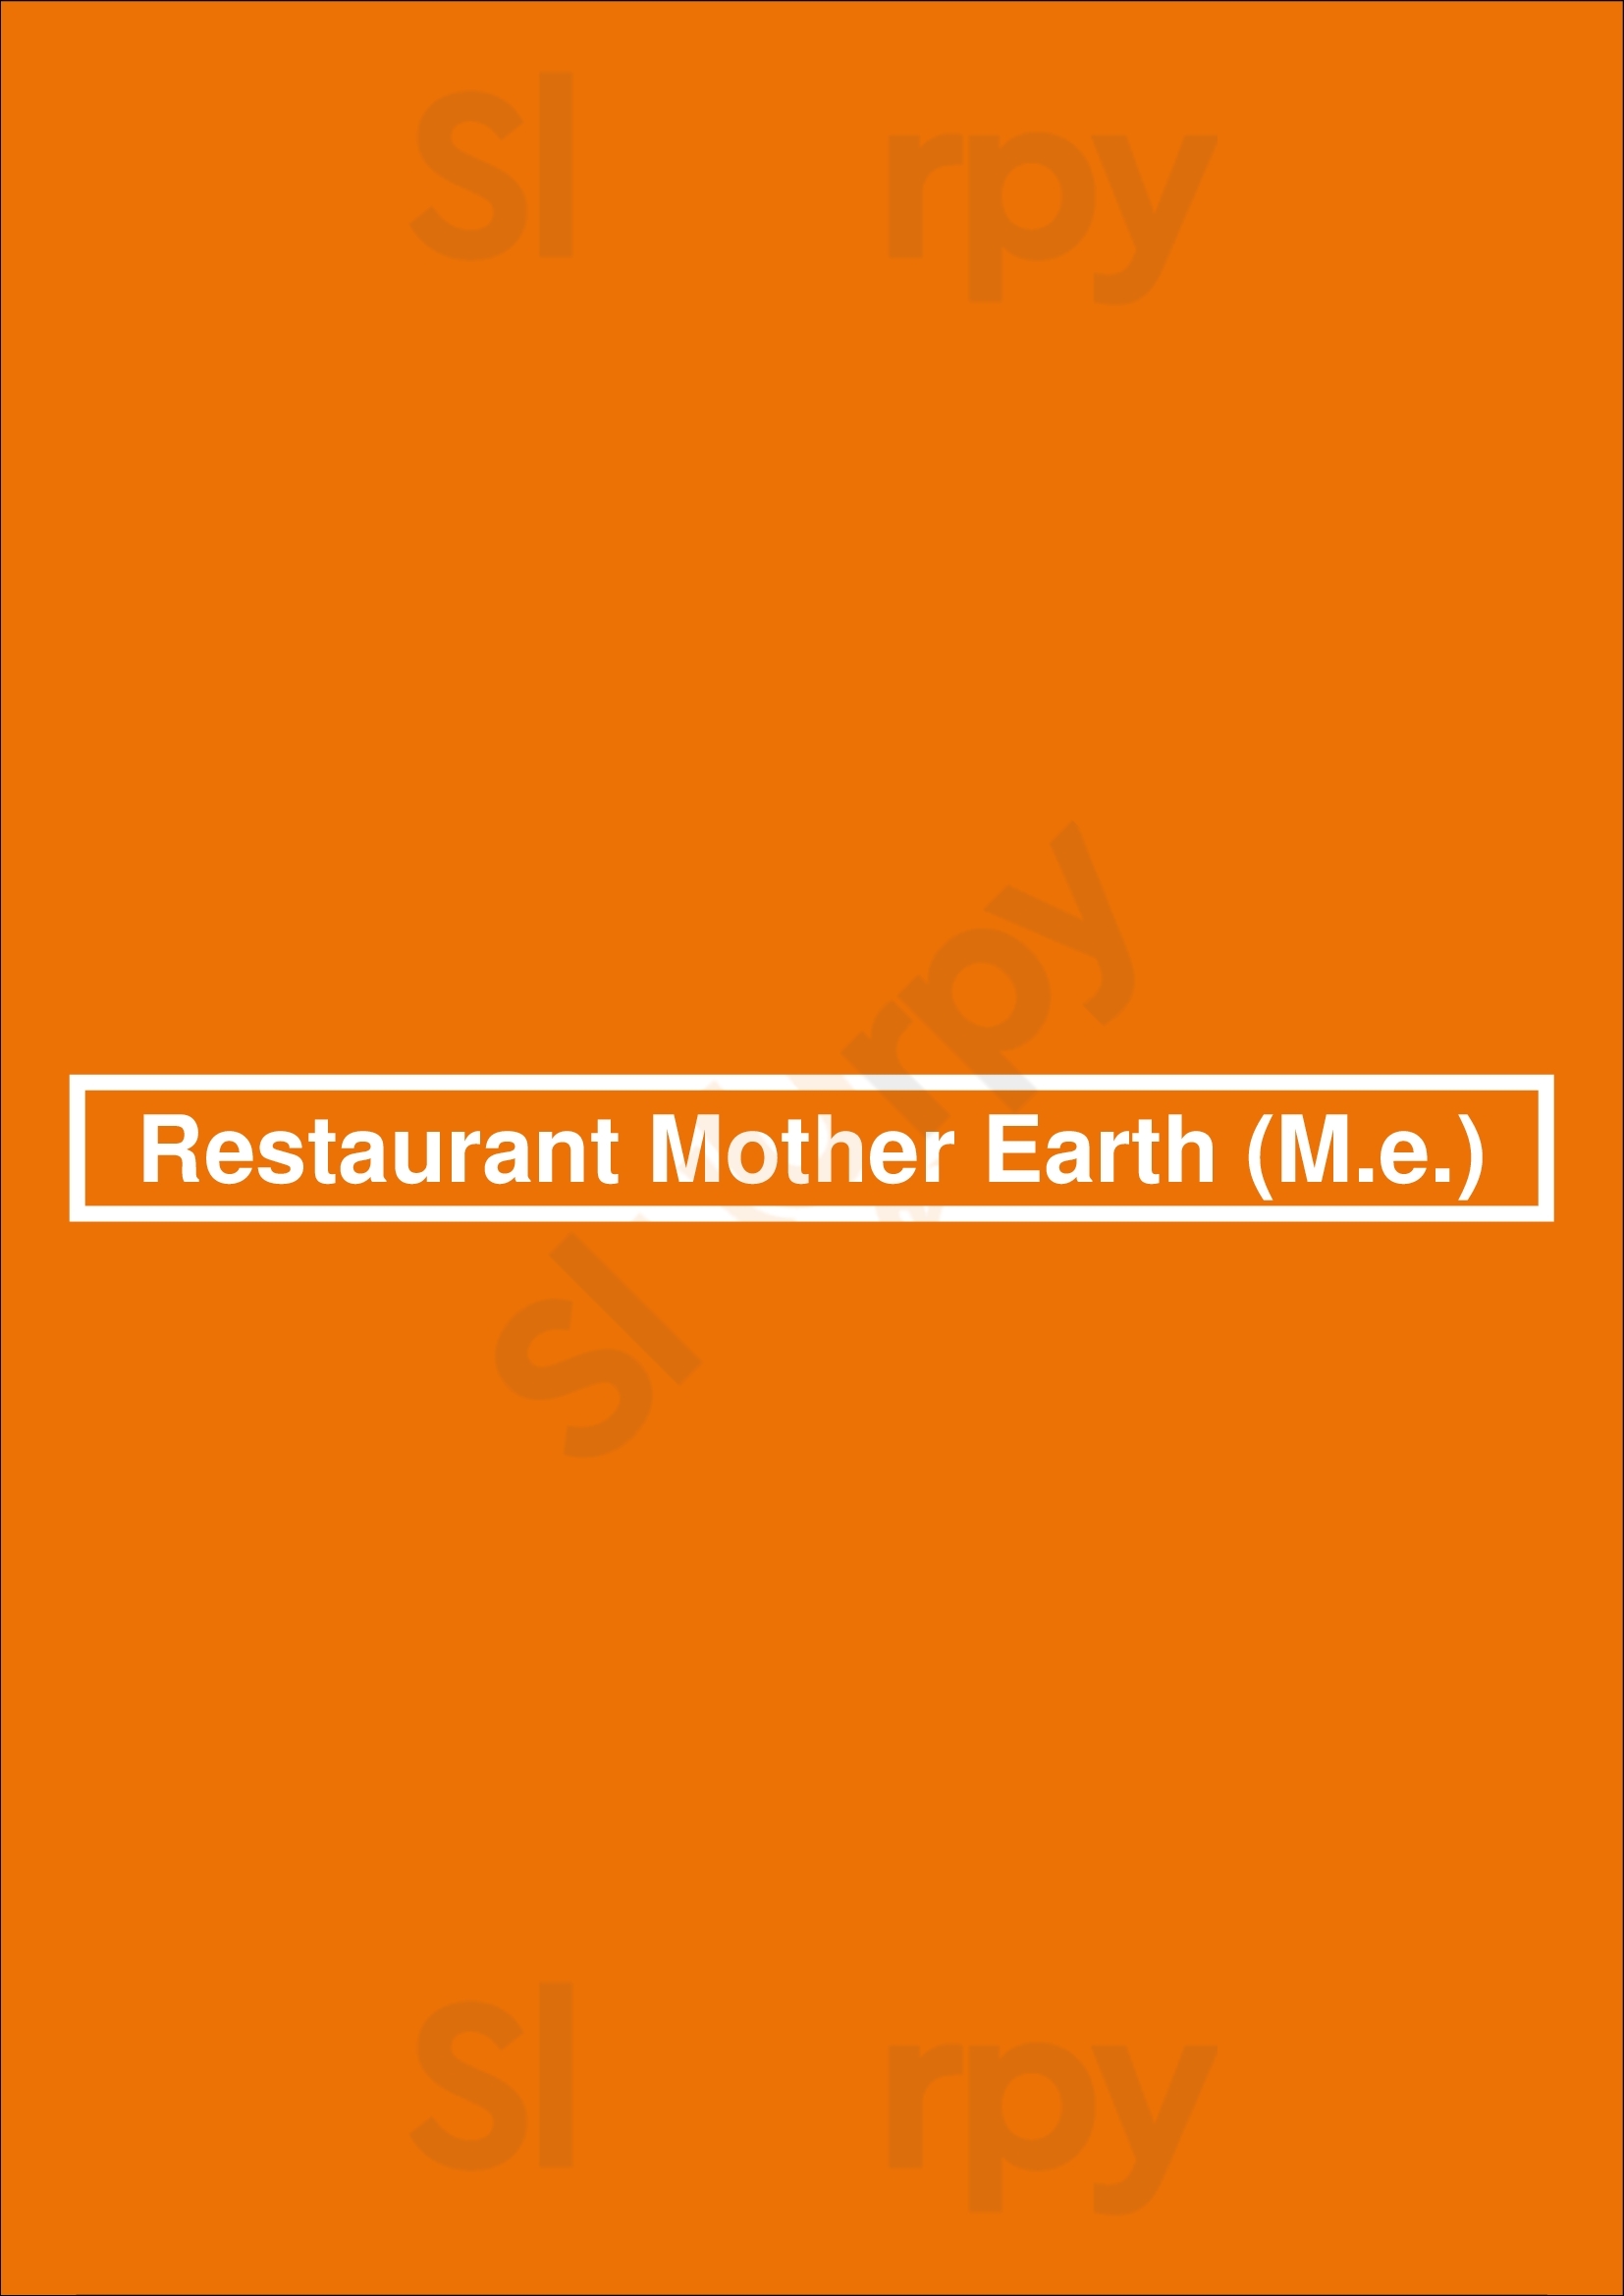 Restaurant Mother Earth (m.e.) Amsterdam Menu - 1